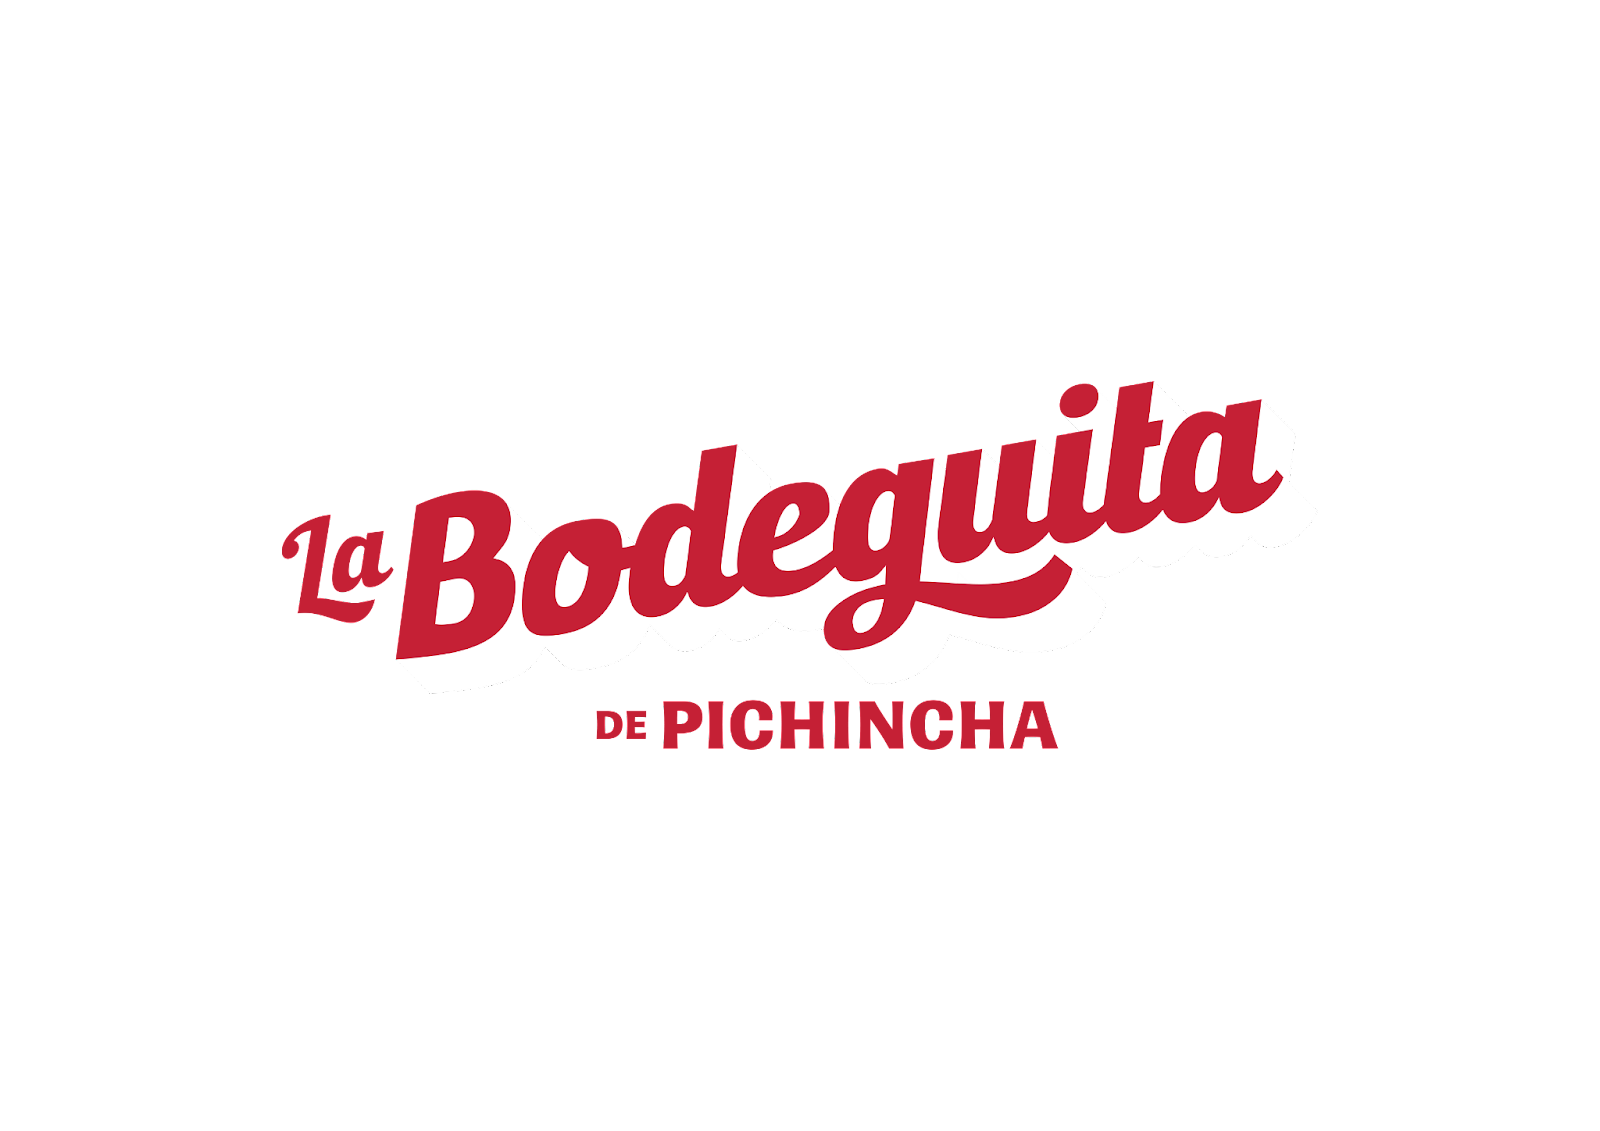 La Bodeguita de Pichincha 